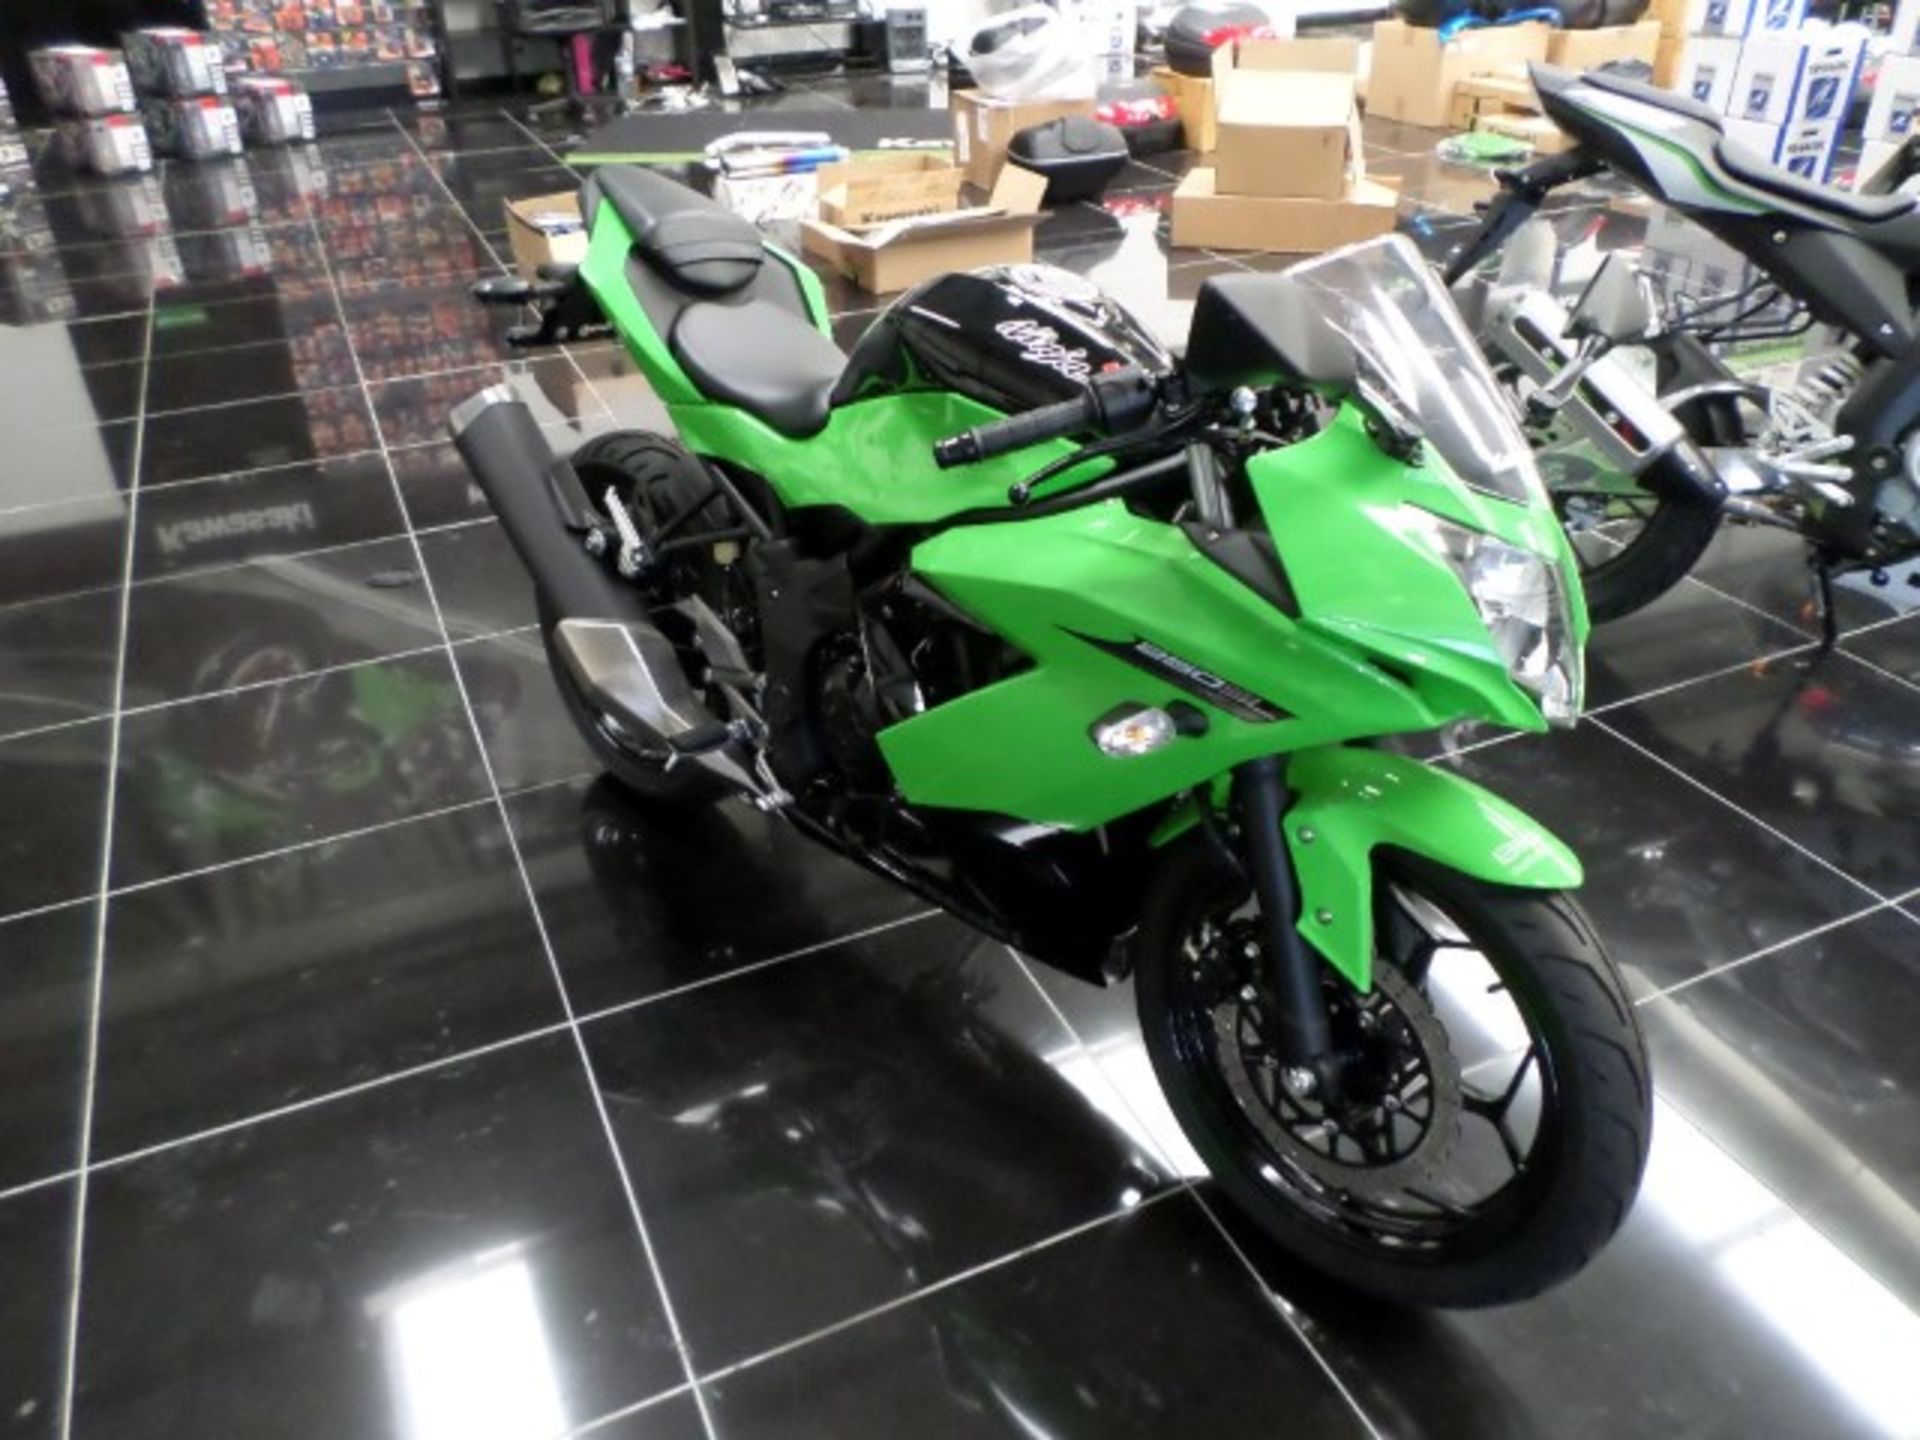 Unregistered Kawasaki 250 SL Ninja fully faired motorcycle Frame no. MH4BX250AAJP01221 (green/black) - Image 4 of 4